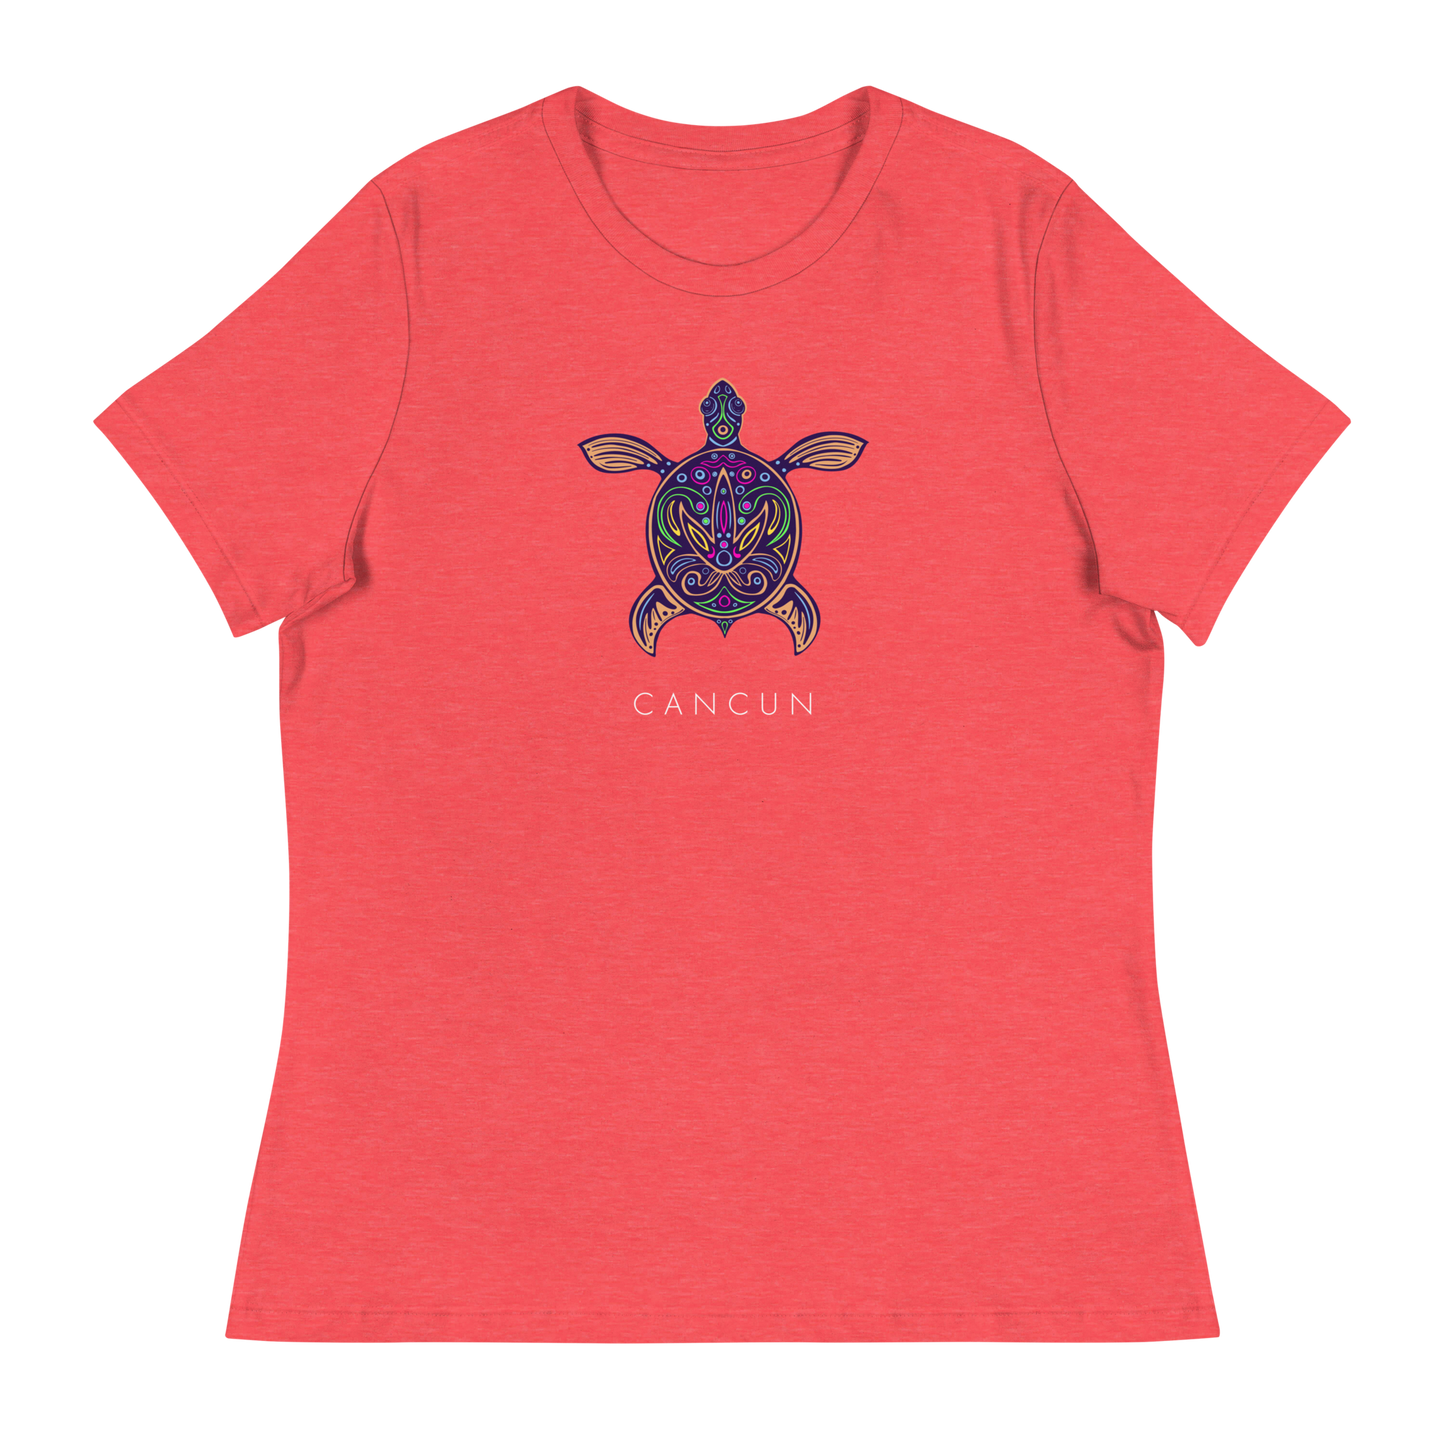 Women's - CANCUN - Tribal Vibrant Turtle T-Shirt